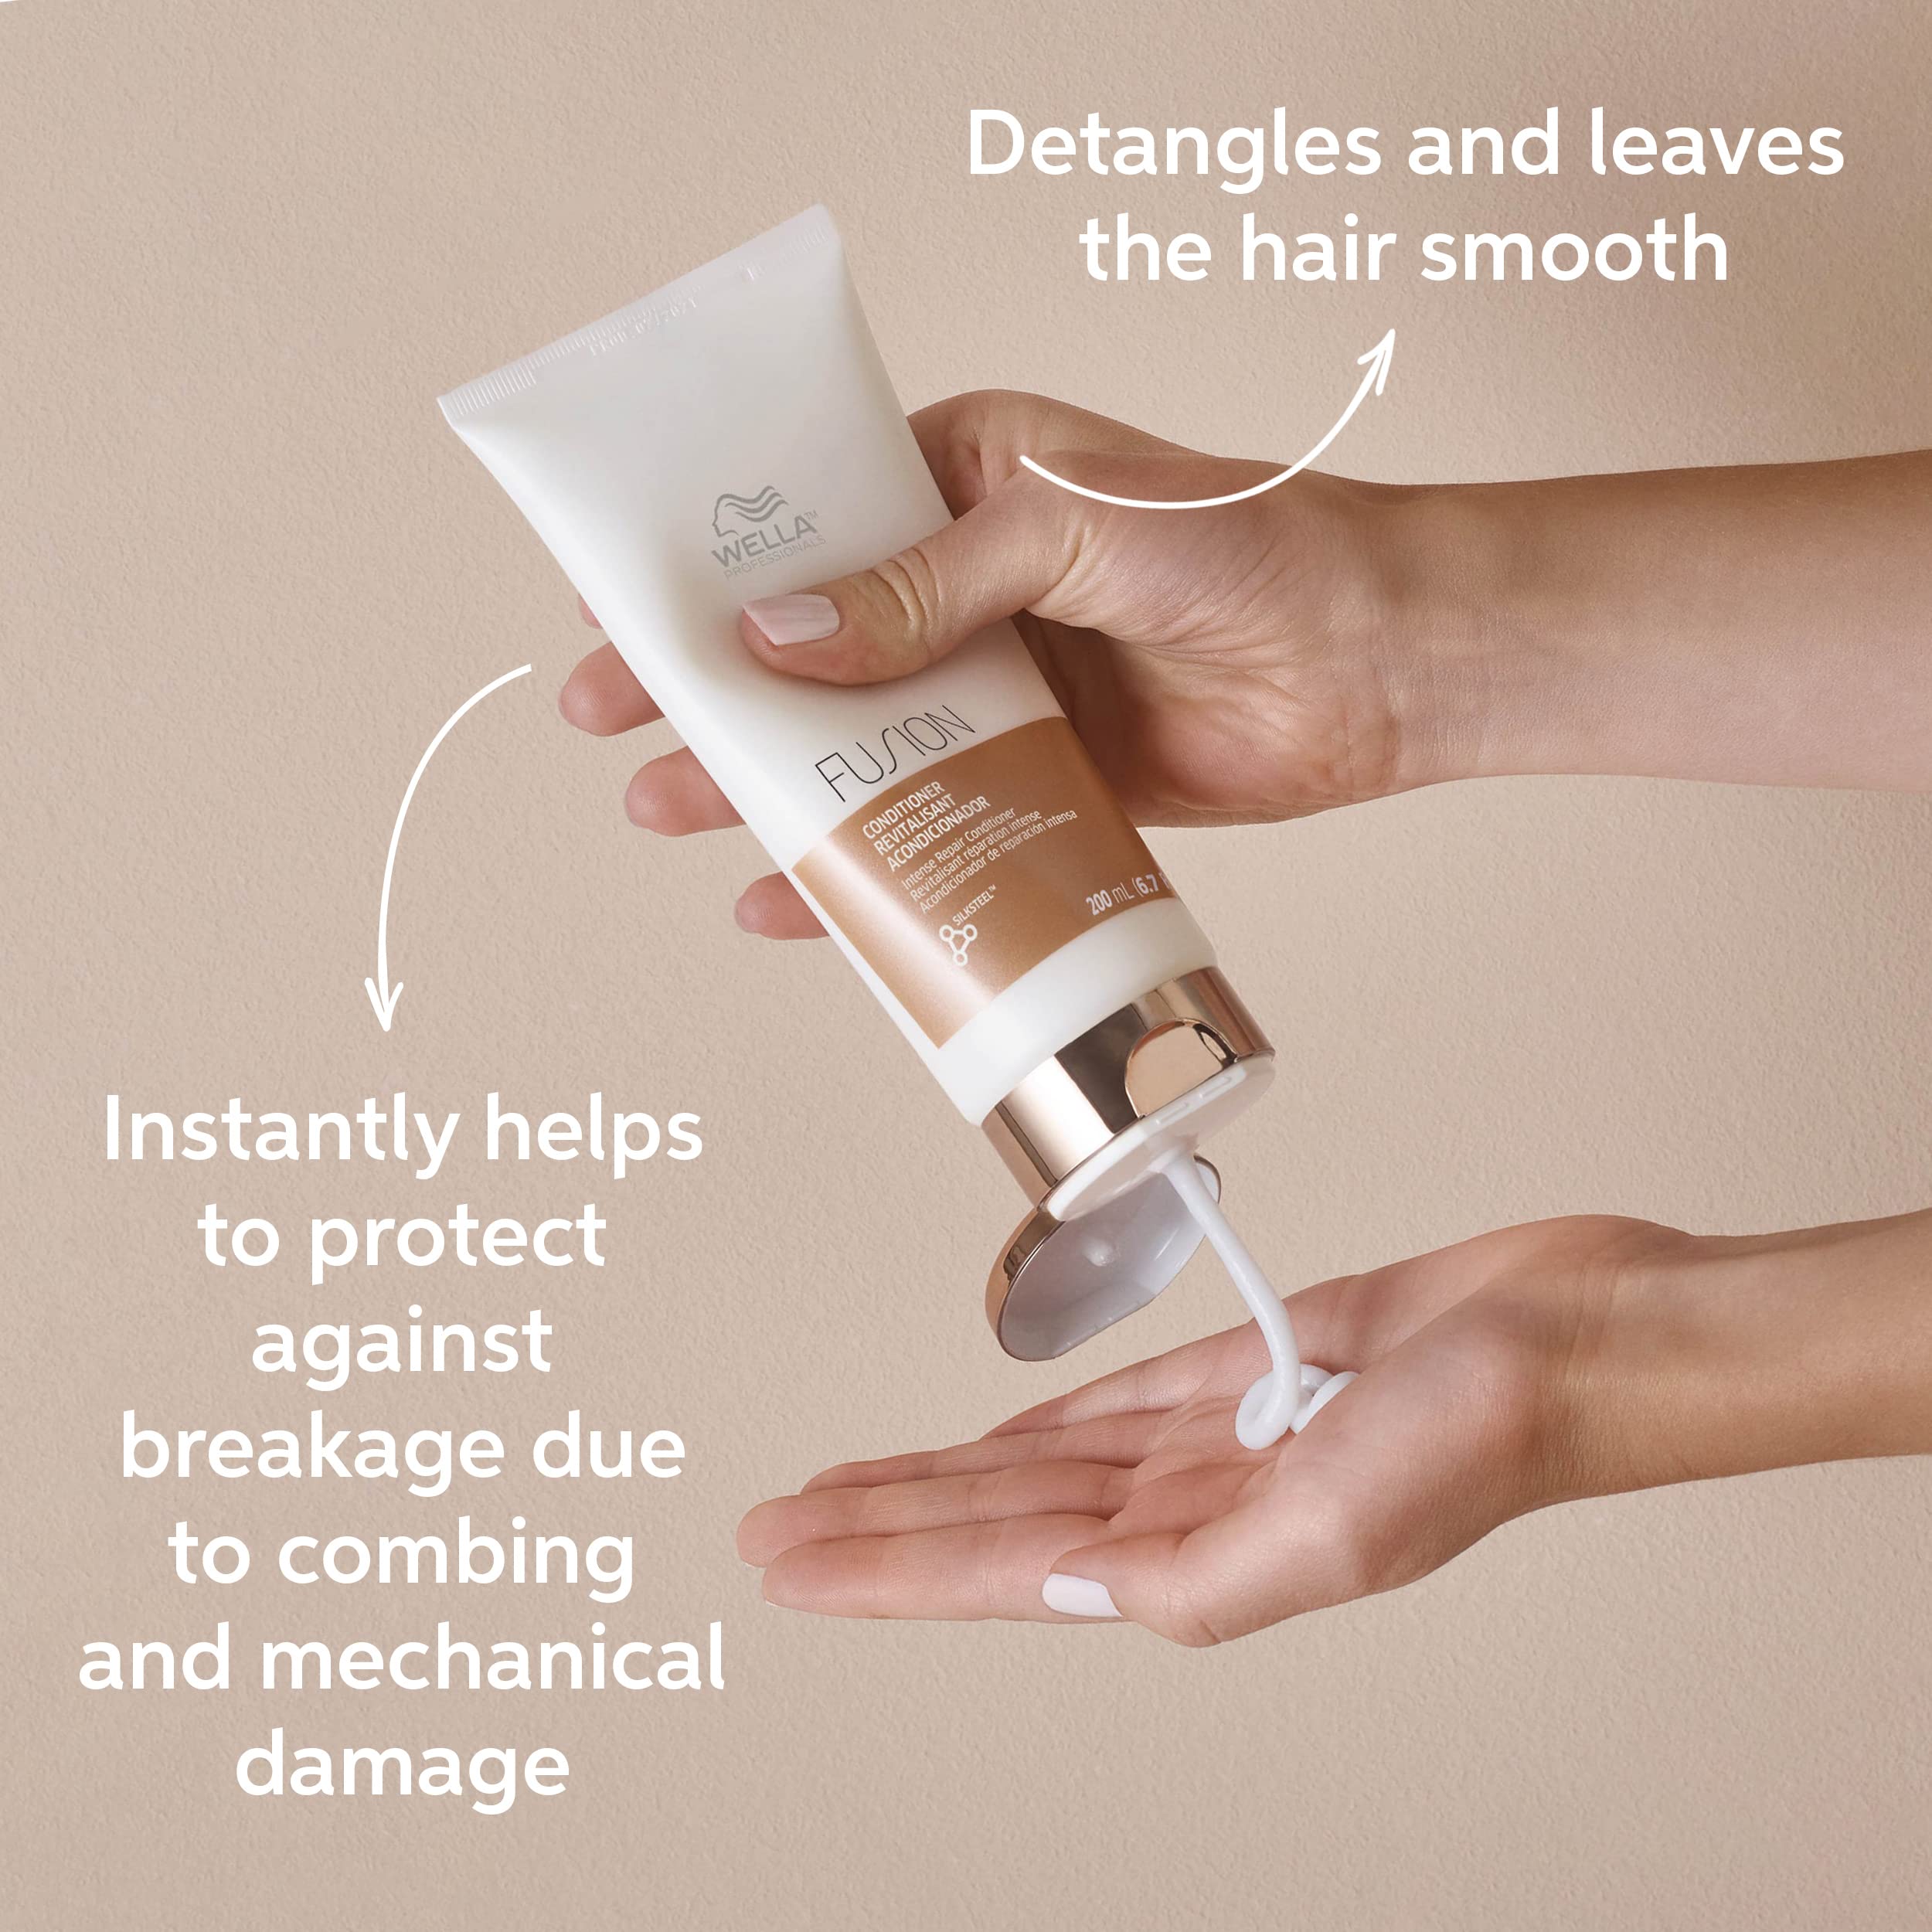 Wella Professionals Fusion Intense Repair Shampoo/Conditioner